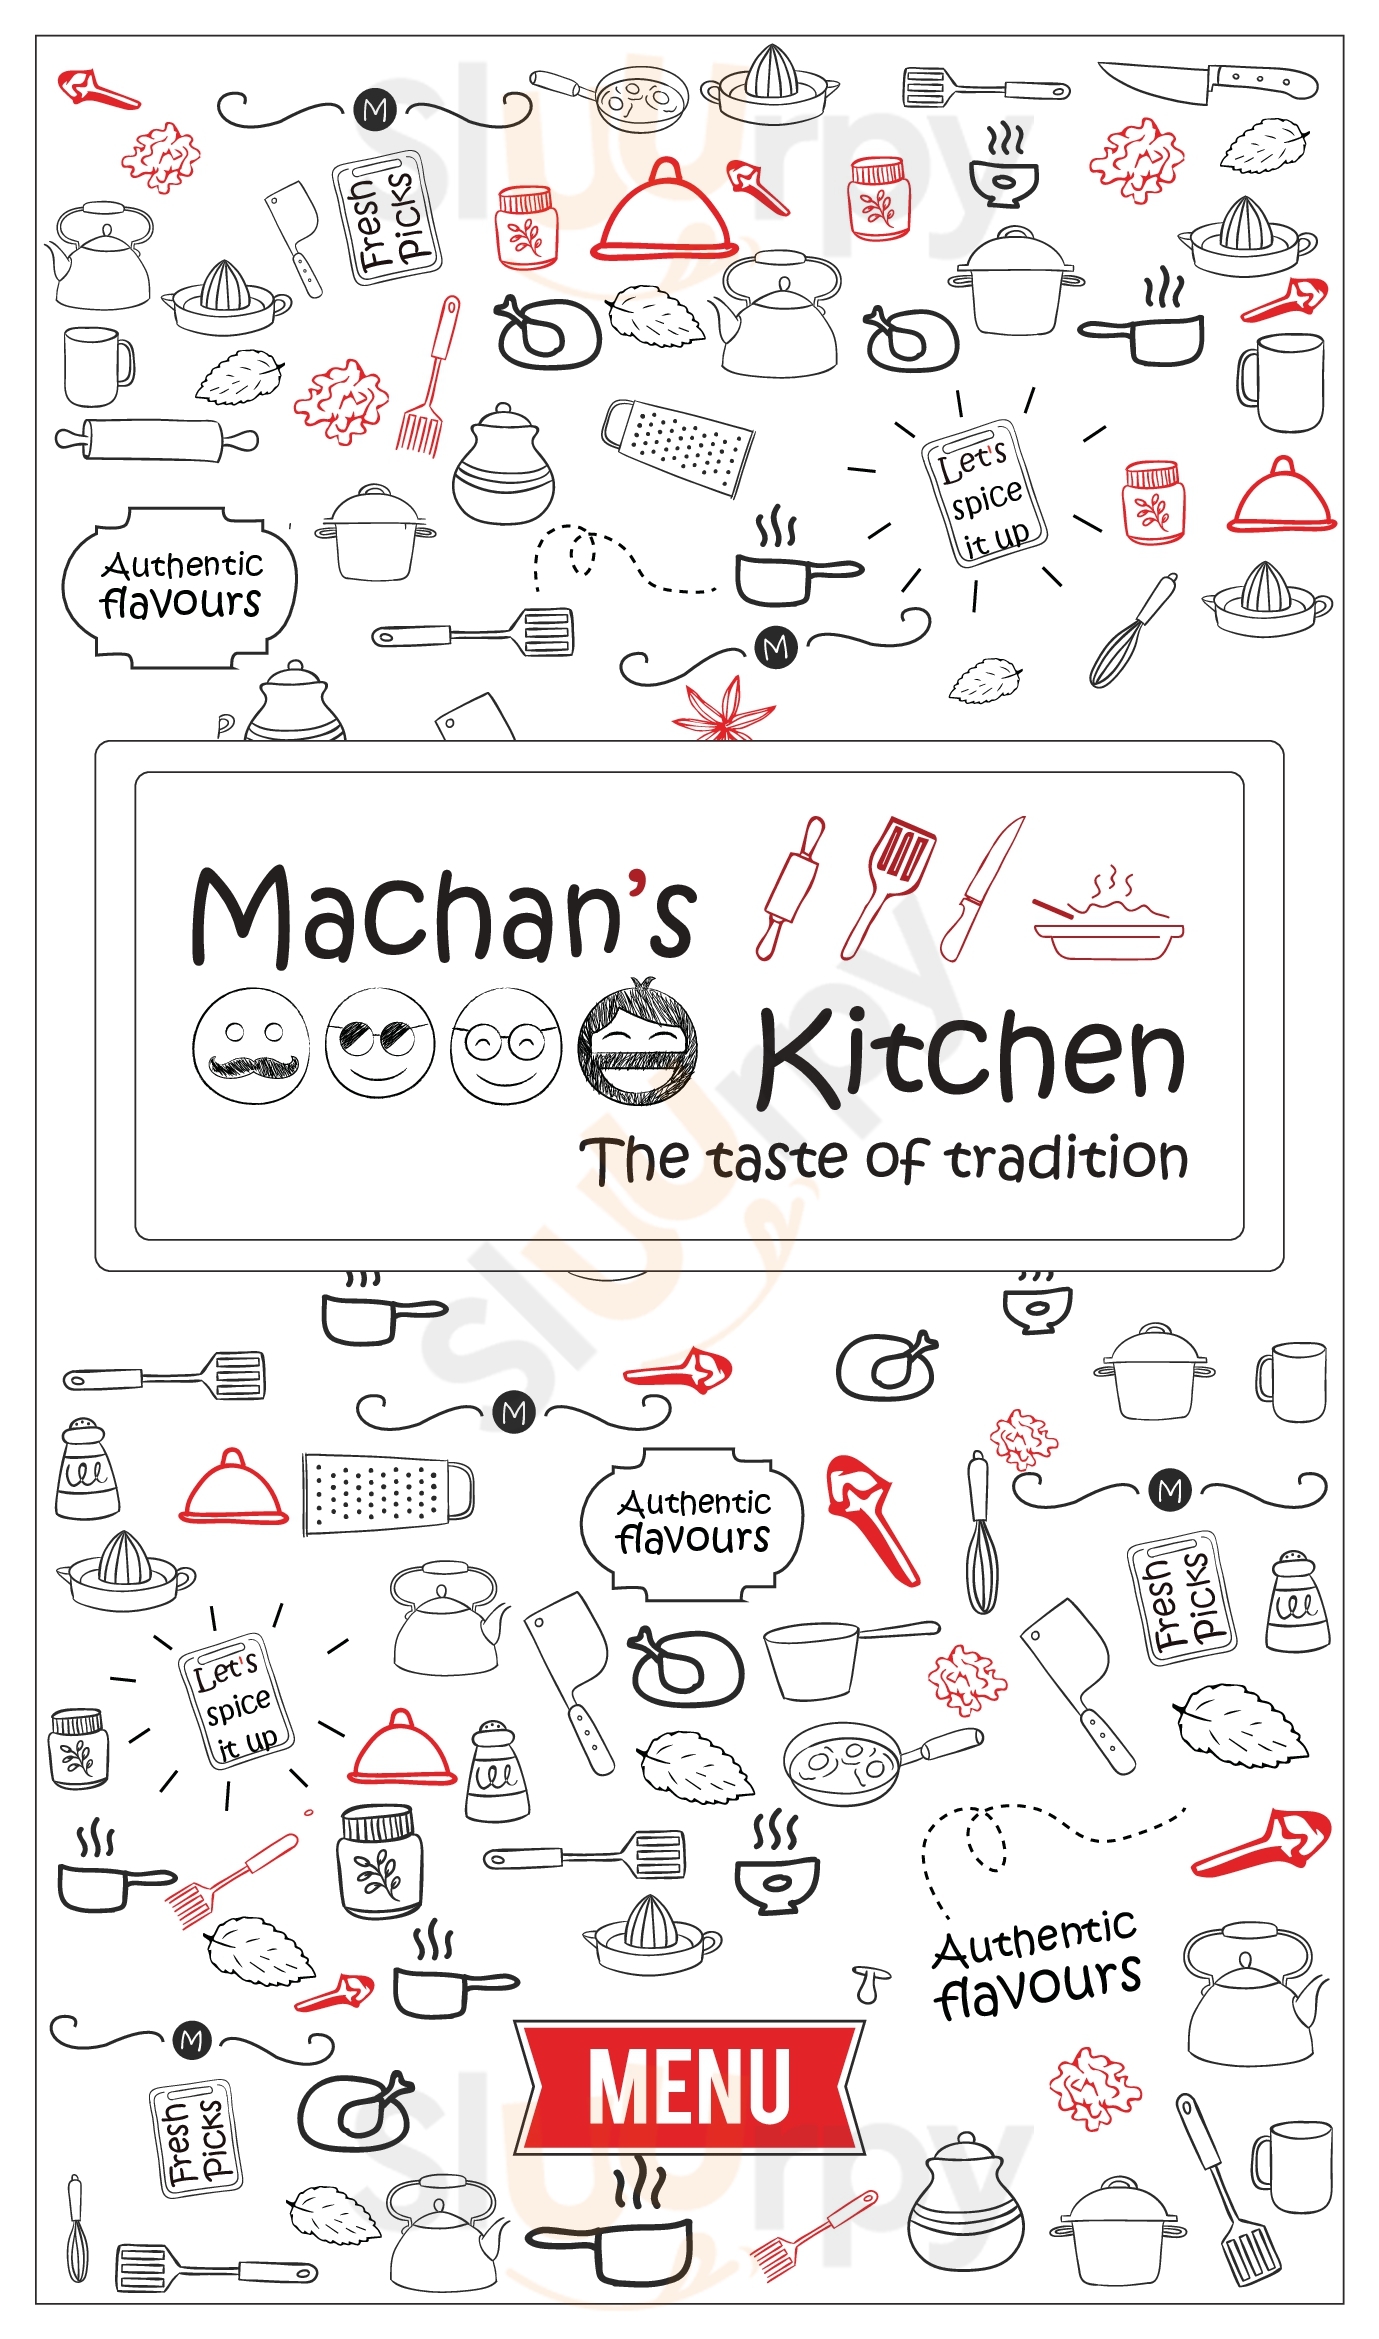 Machan's Kitchen Singapore Menu - 1